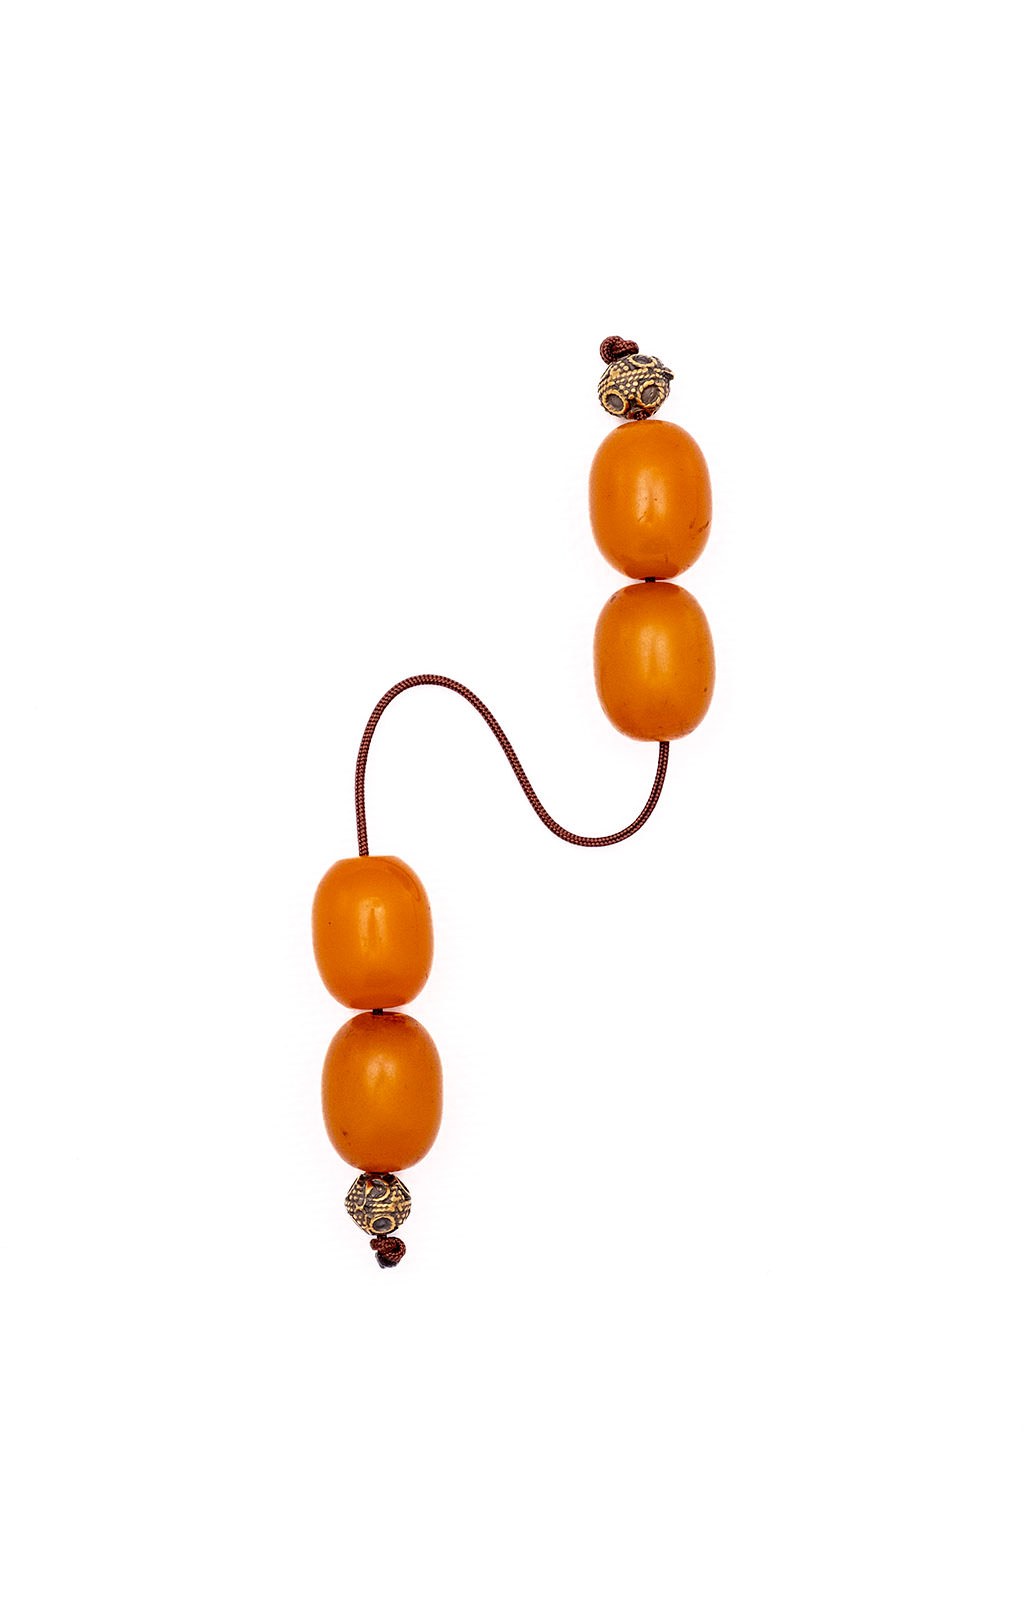 Begleri with beads made of Mastic-Amber, 1920-40